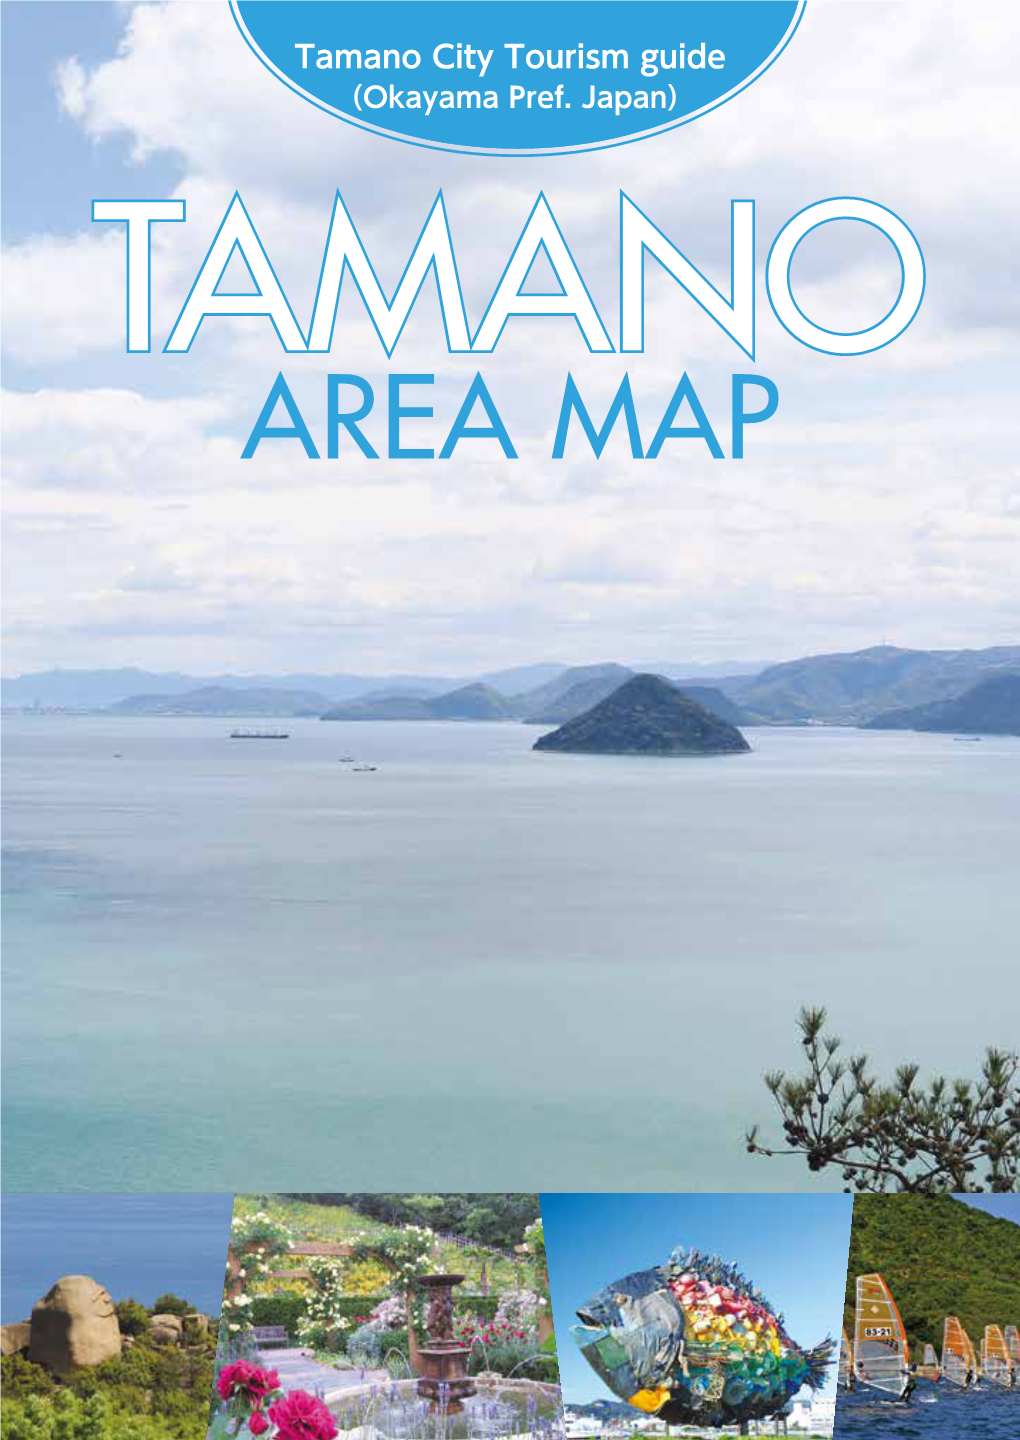 Japan） TAMANO AREA MAP Welcome to Tamano City Sapporo JAPAN